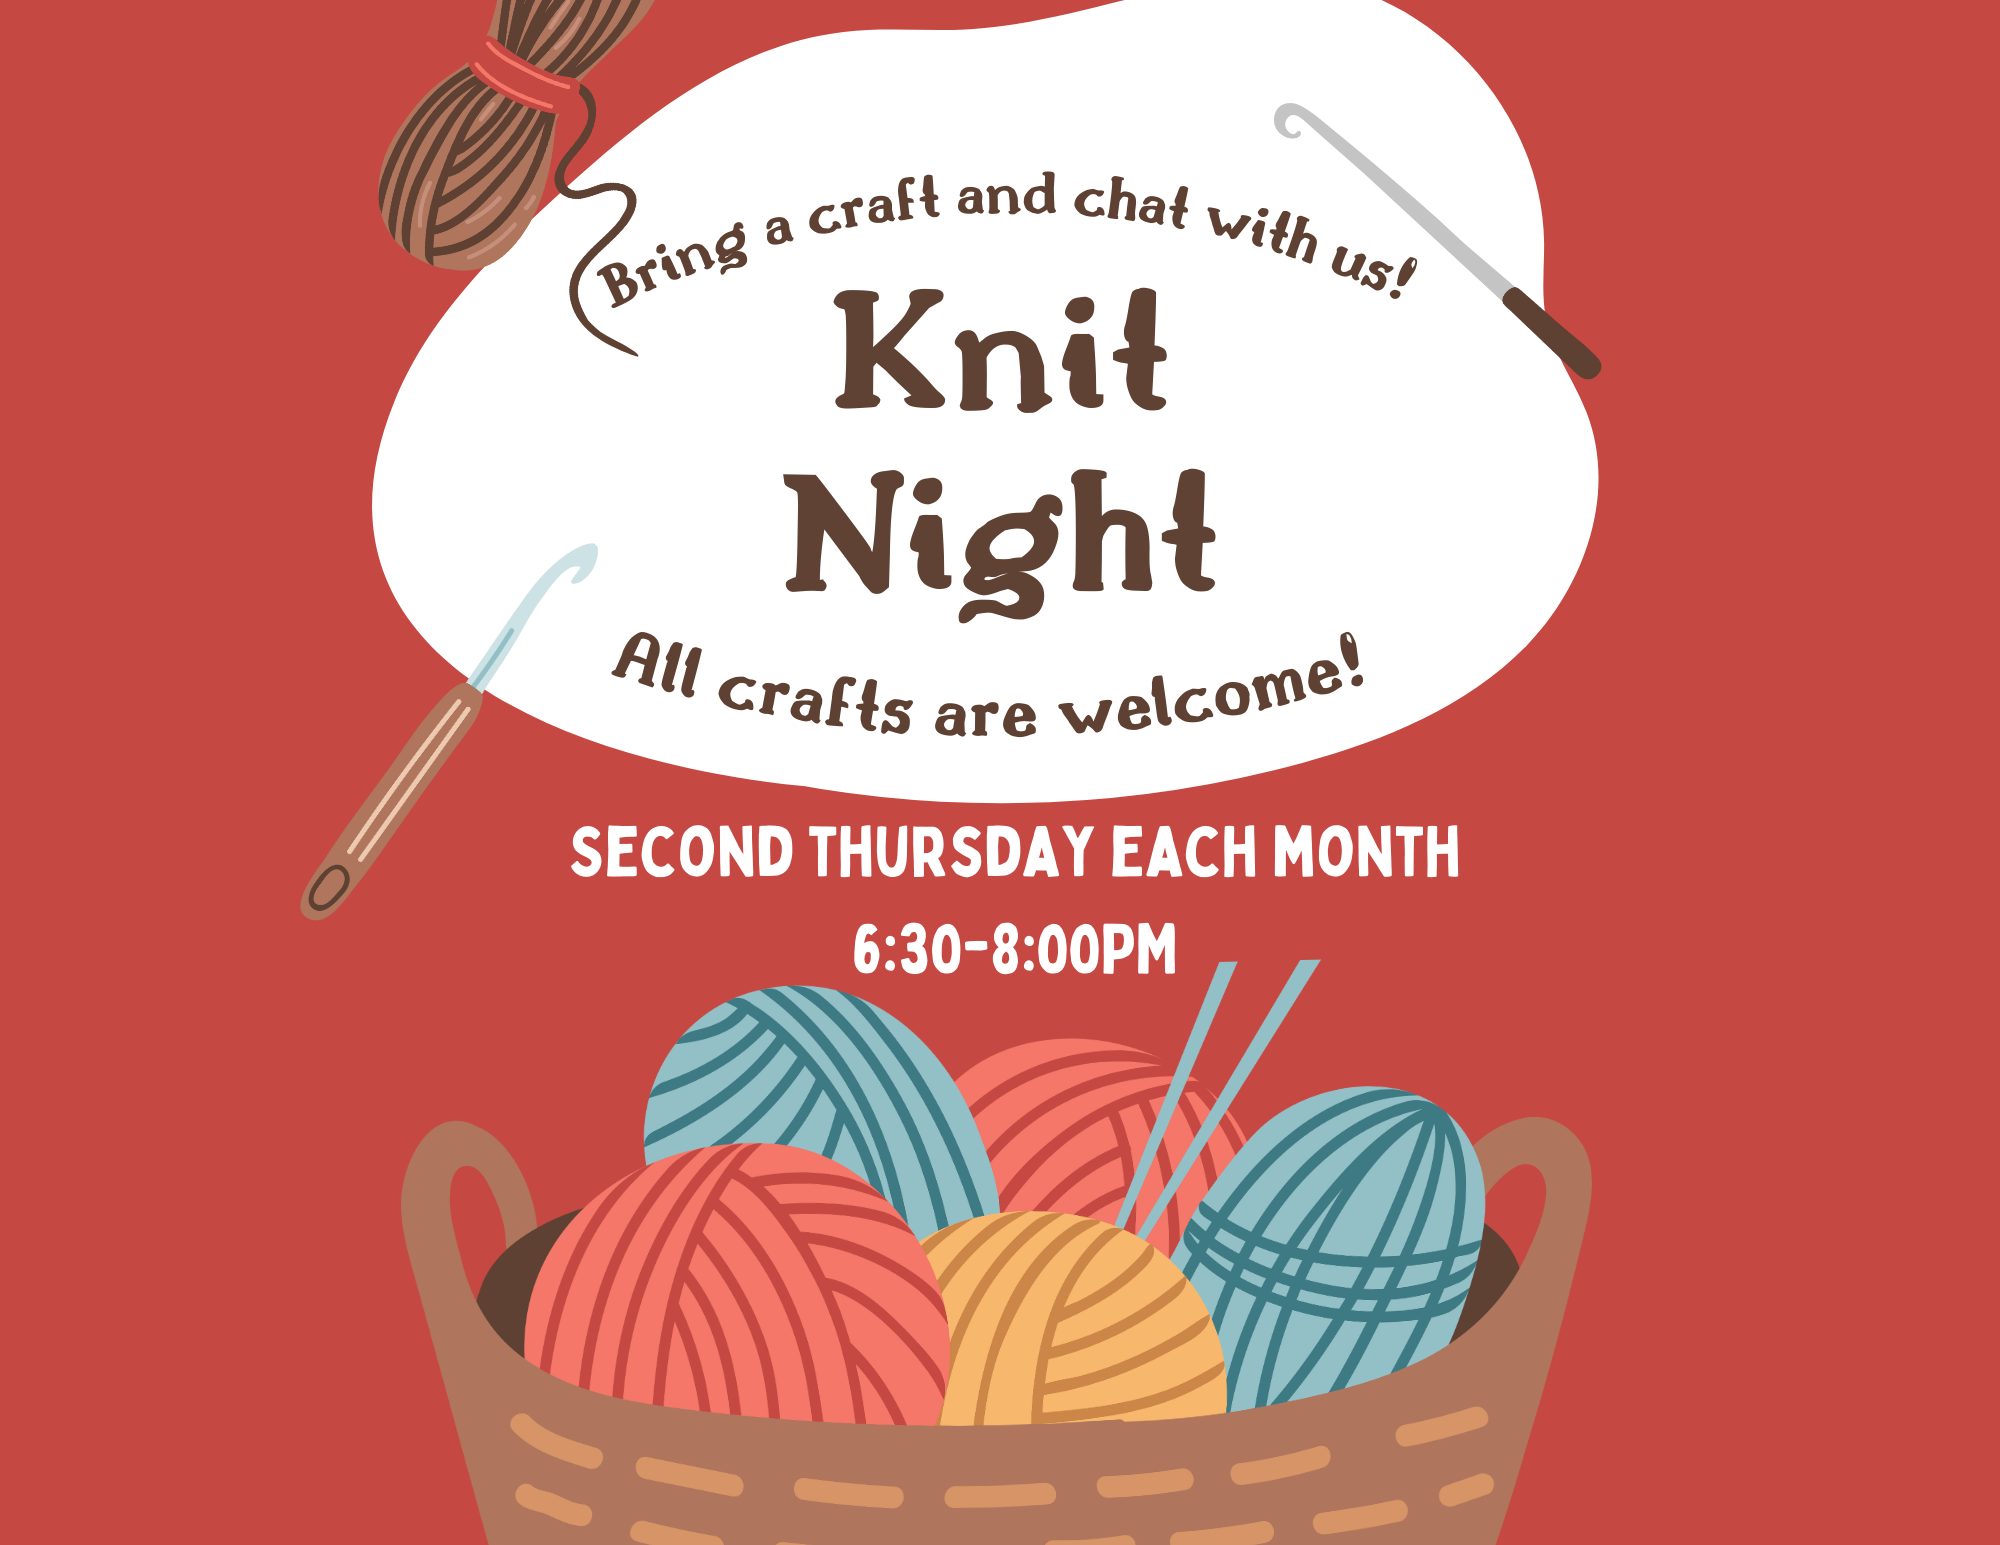 A basket of yarn, crochet hooks, and knitting needles